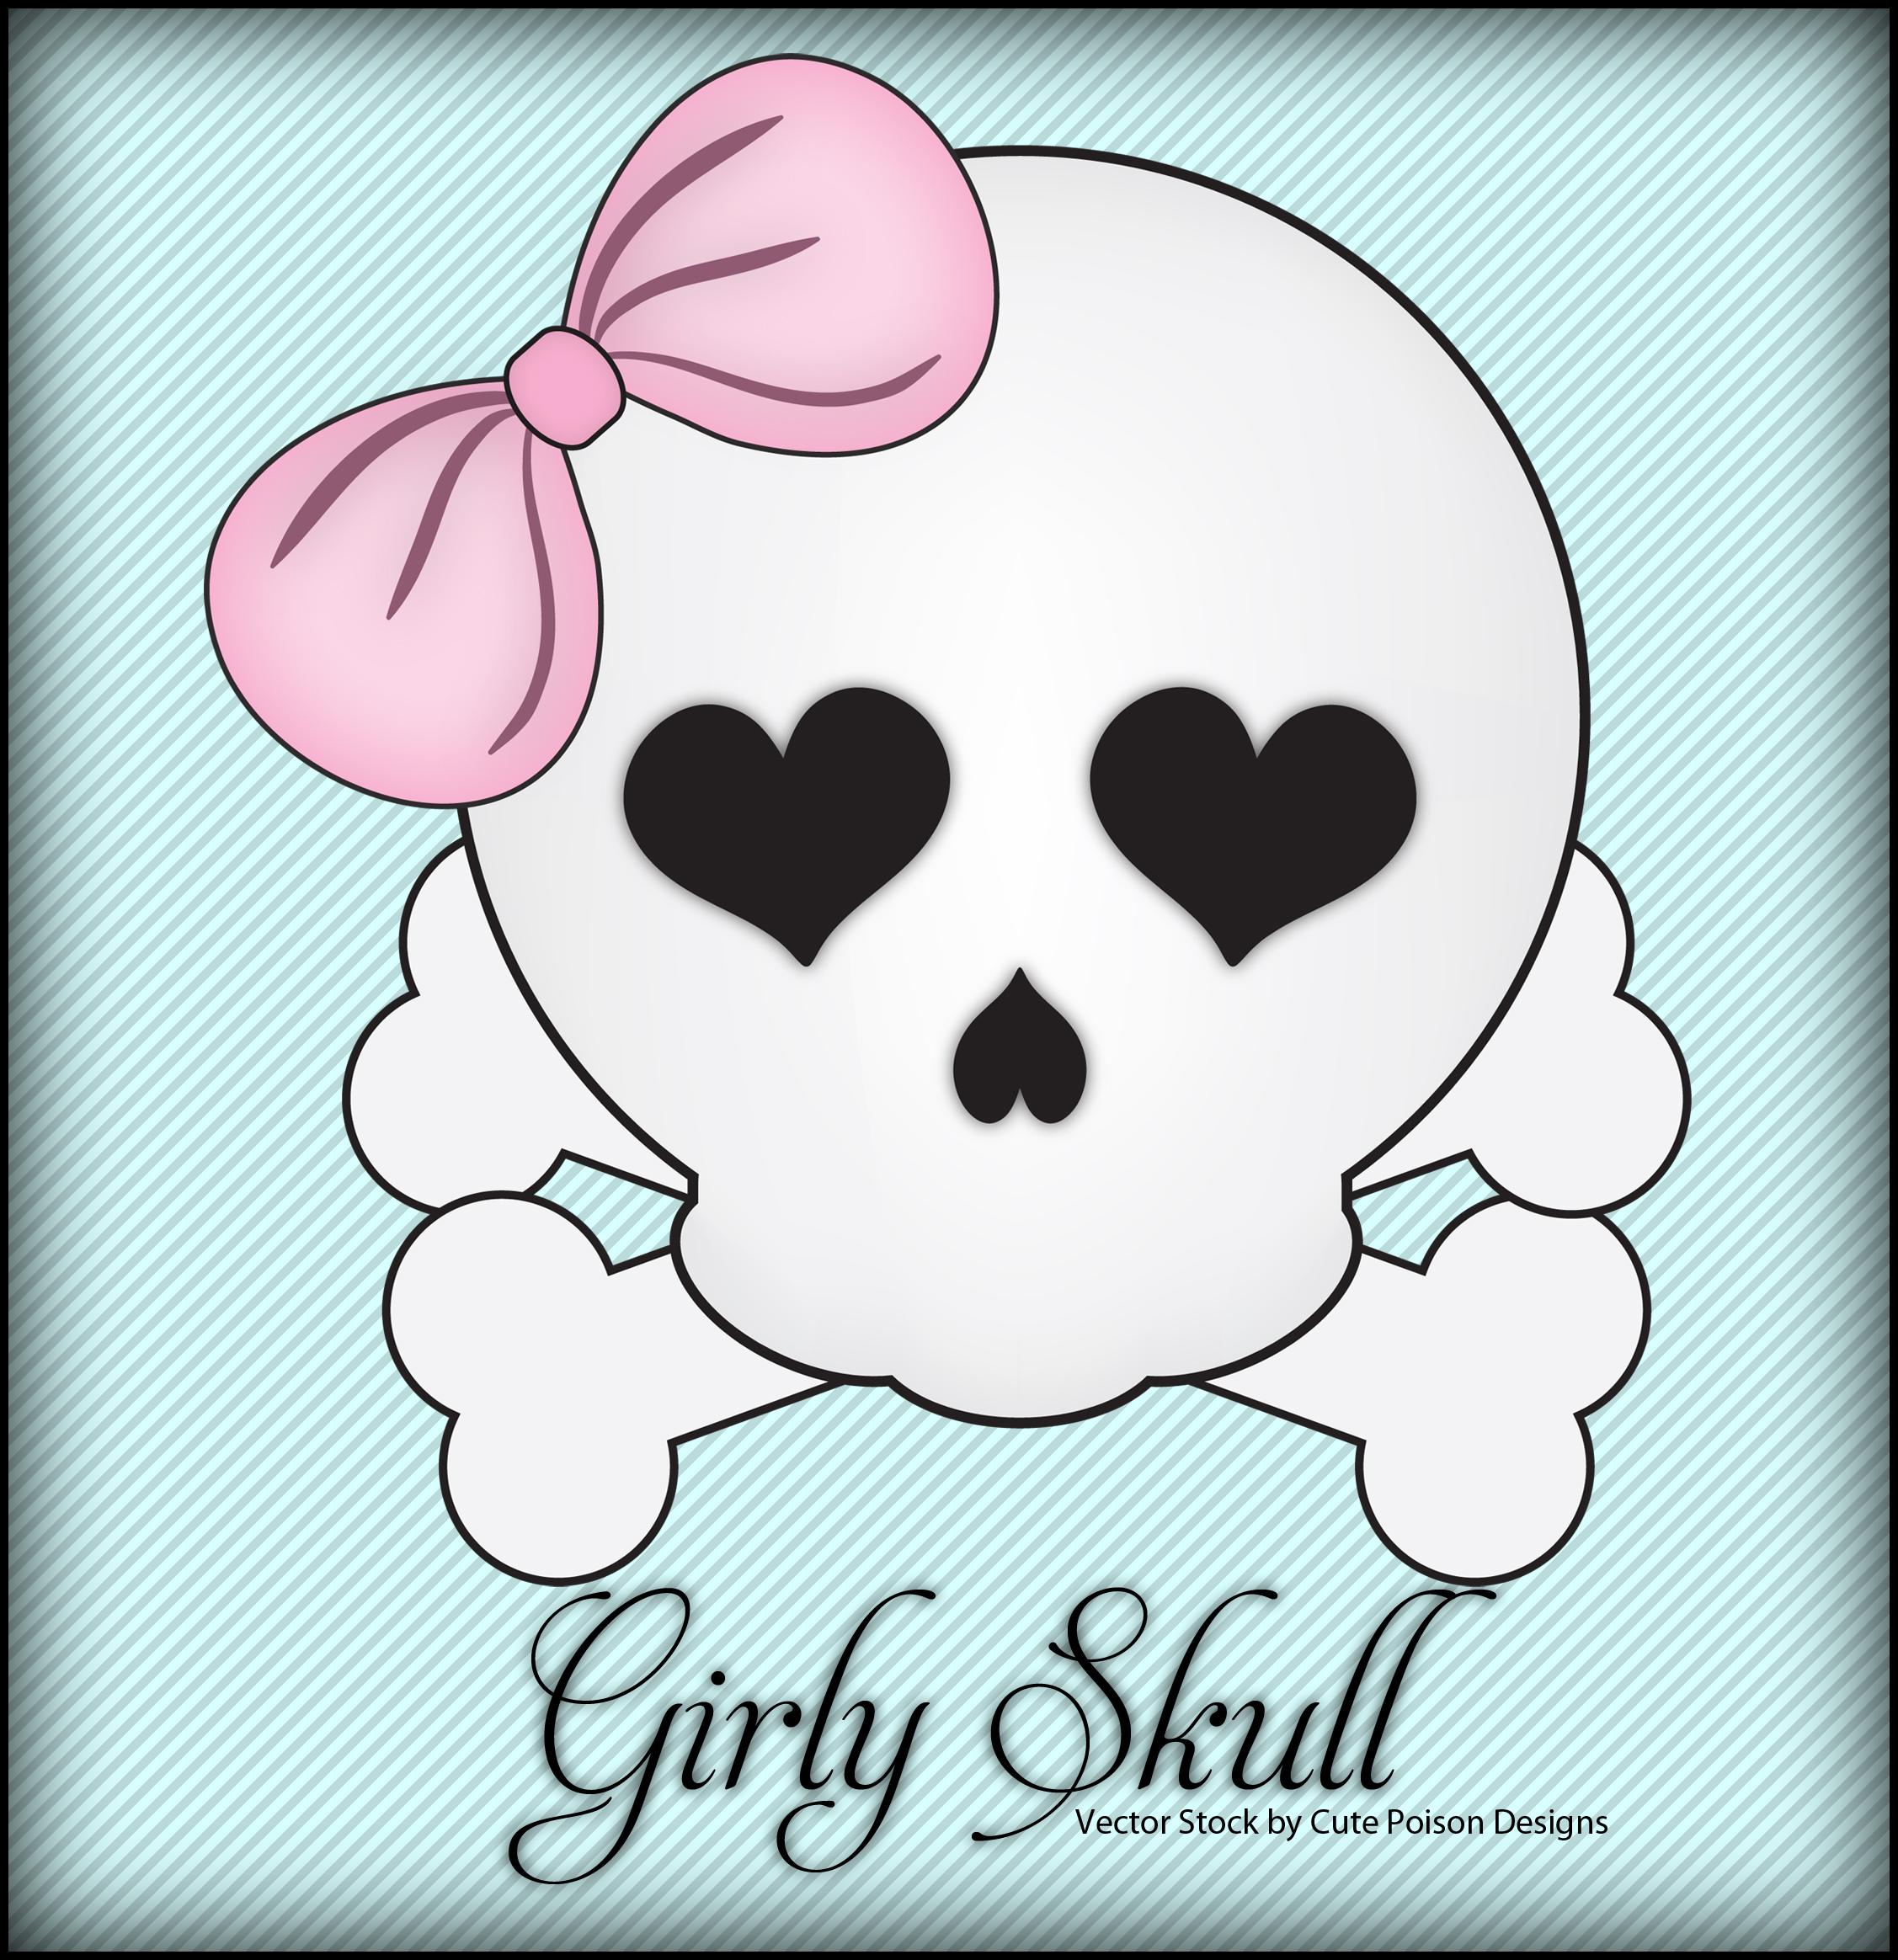 Cute Girly Skull Designs